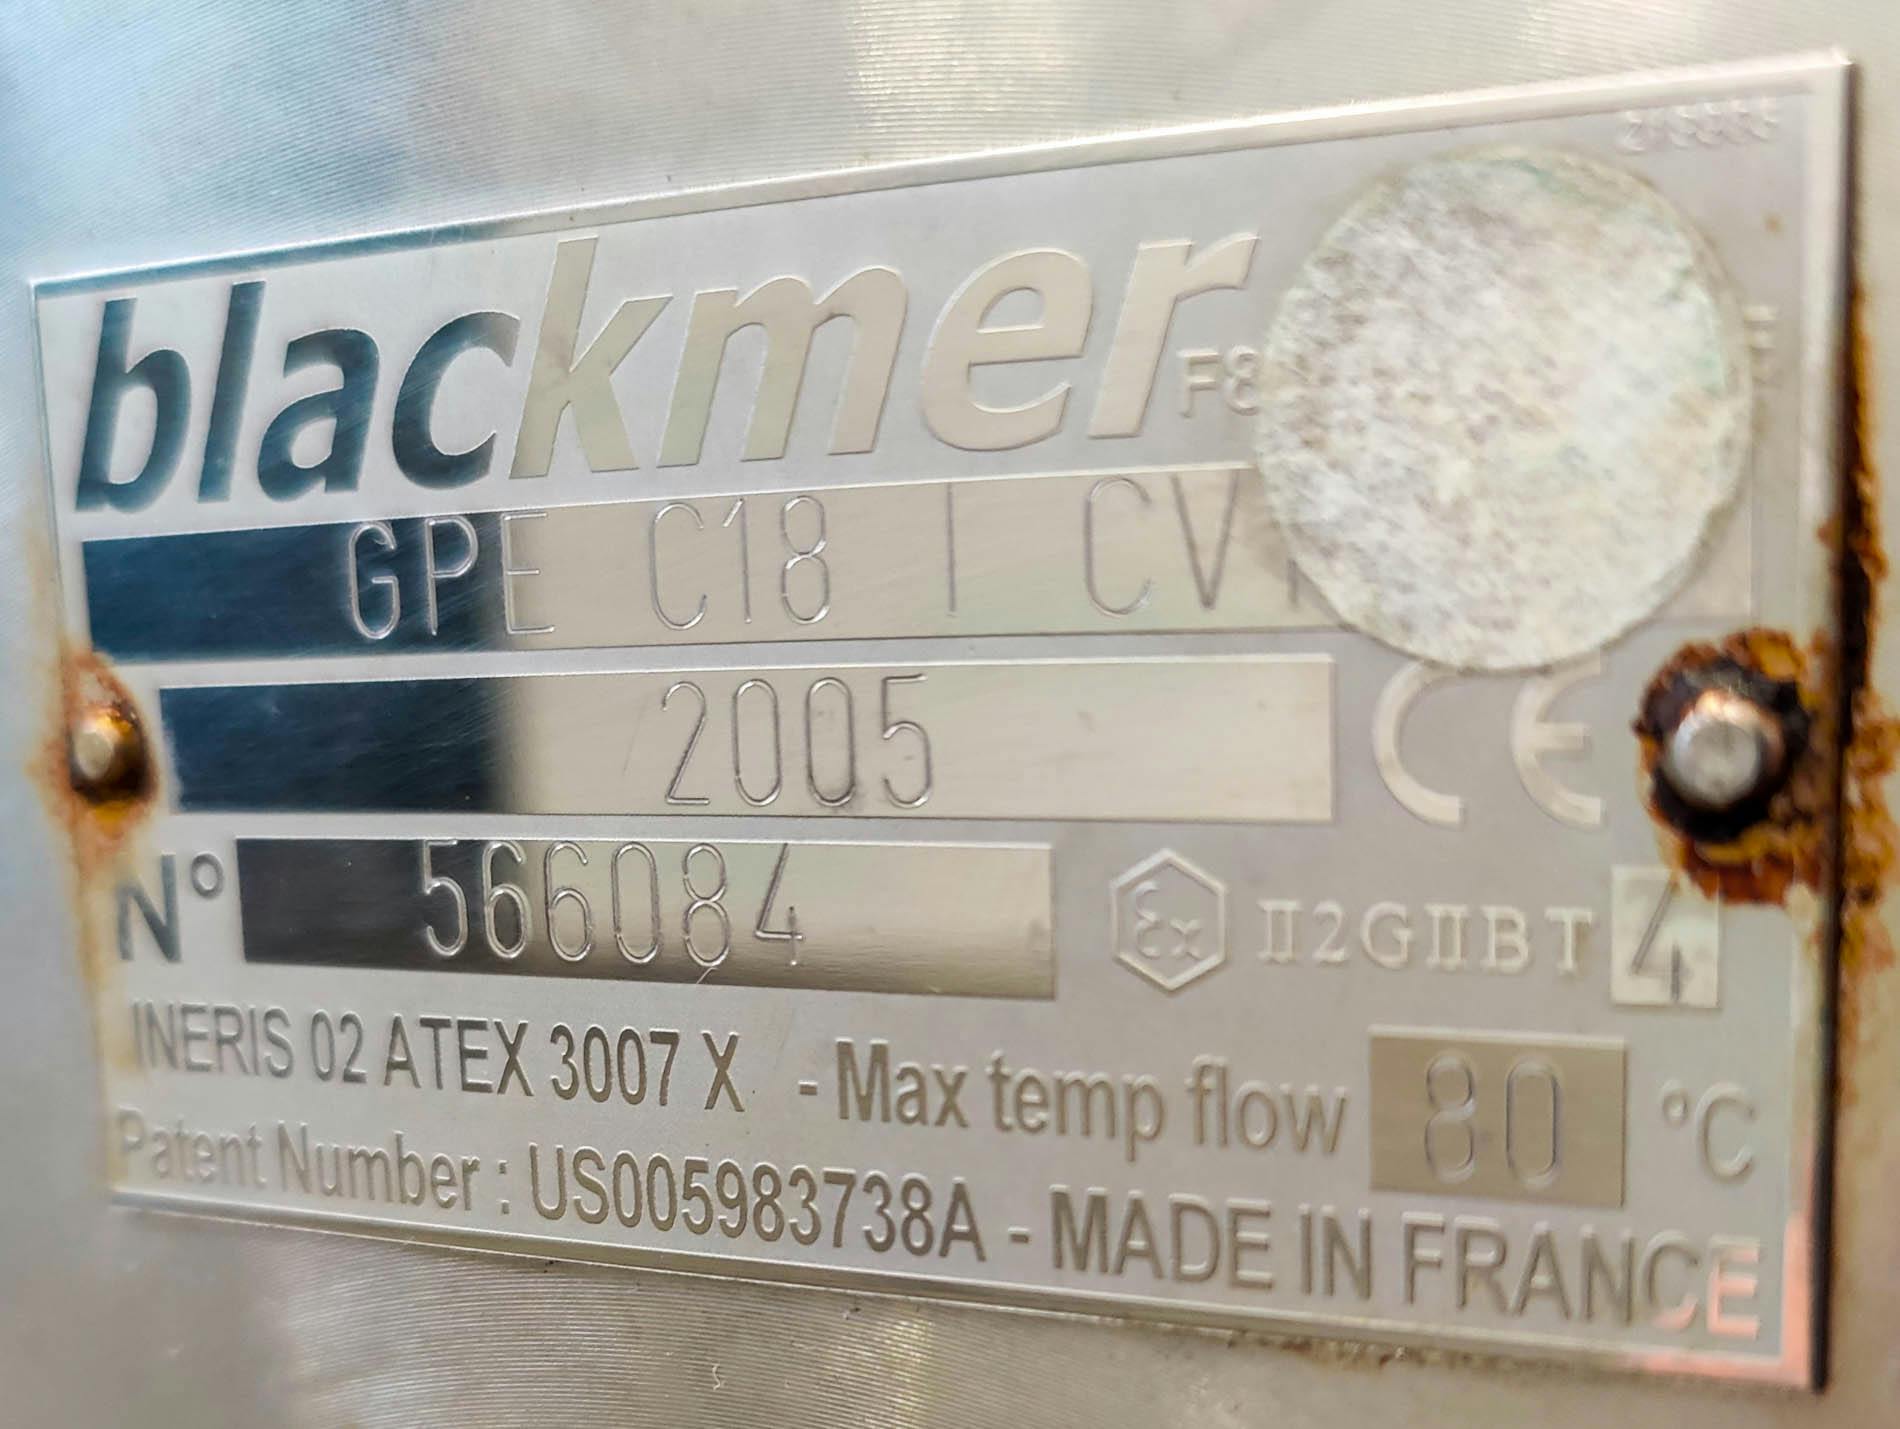 Blackmer GPI C18 I CV - Eccentric Screw Pump - image 11